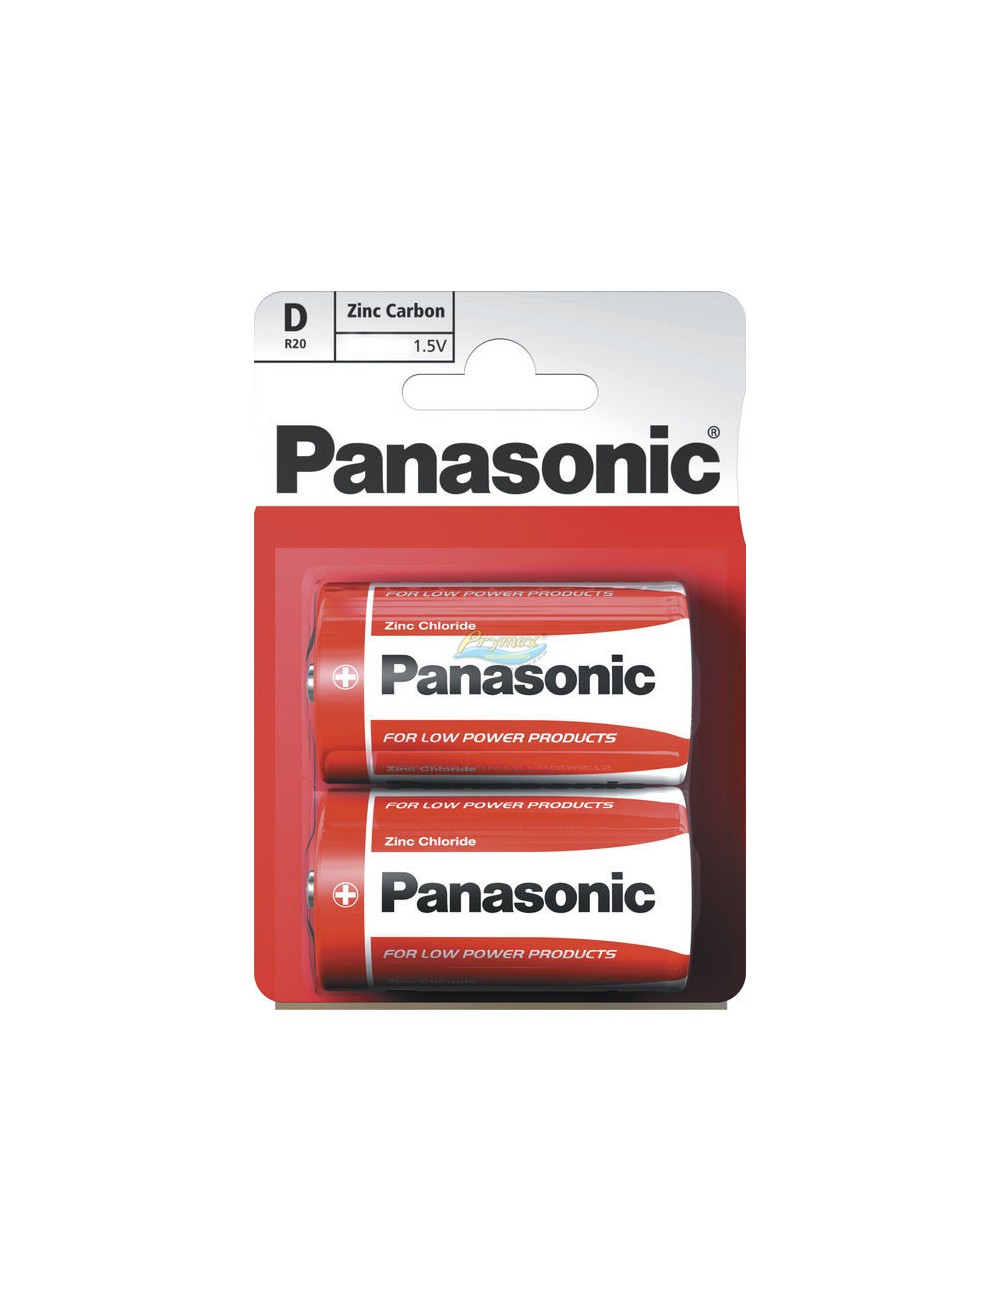 Panasonic Zinc Carbon D R20 Baterie Cynkowo-Węglowe 1,5 V 2 szt